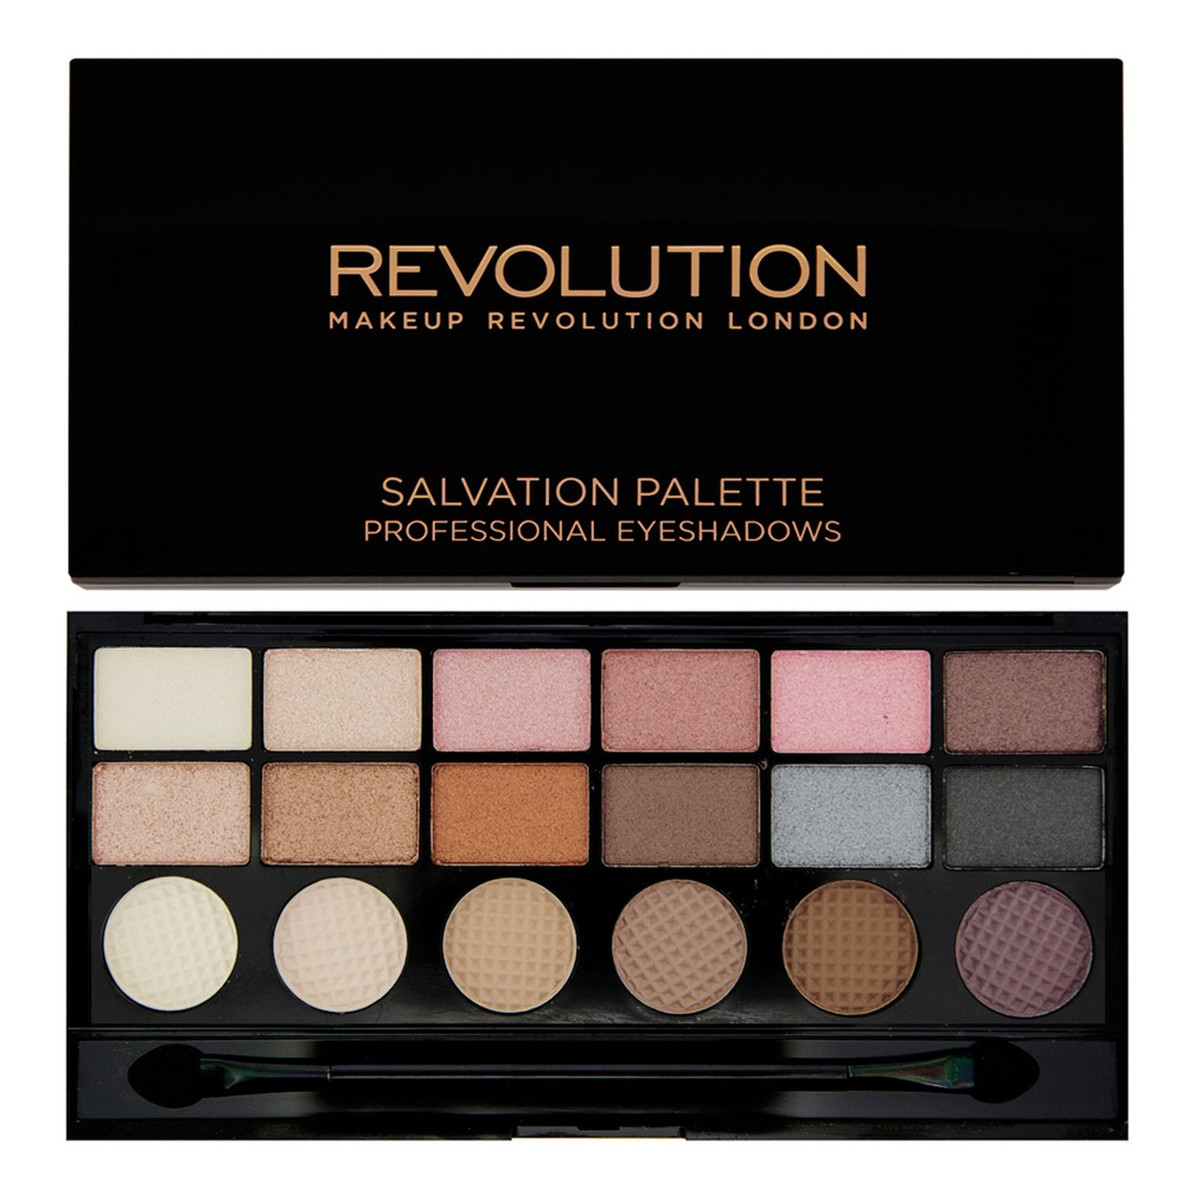 Makeup Revolution Salvation Palette 18 Shade Girl Panic Paleta 18 Cieni Do Powiek 13g